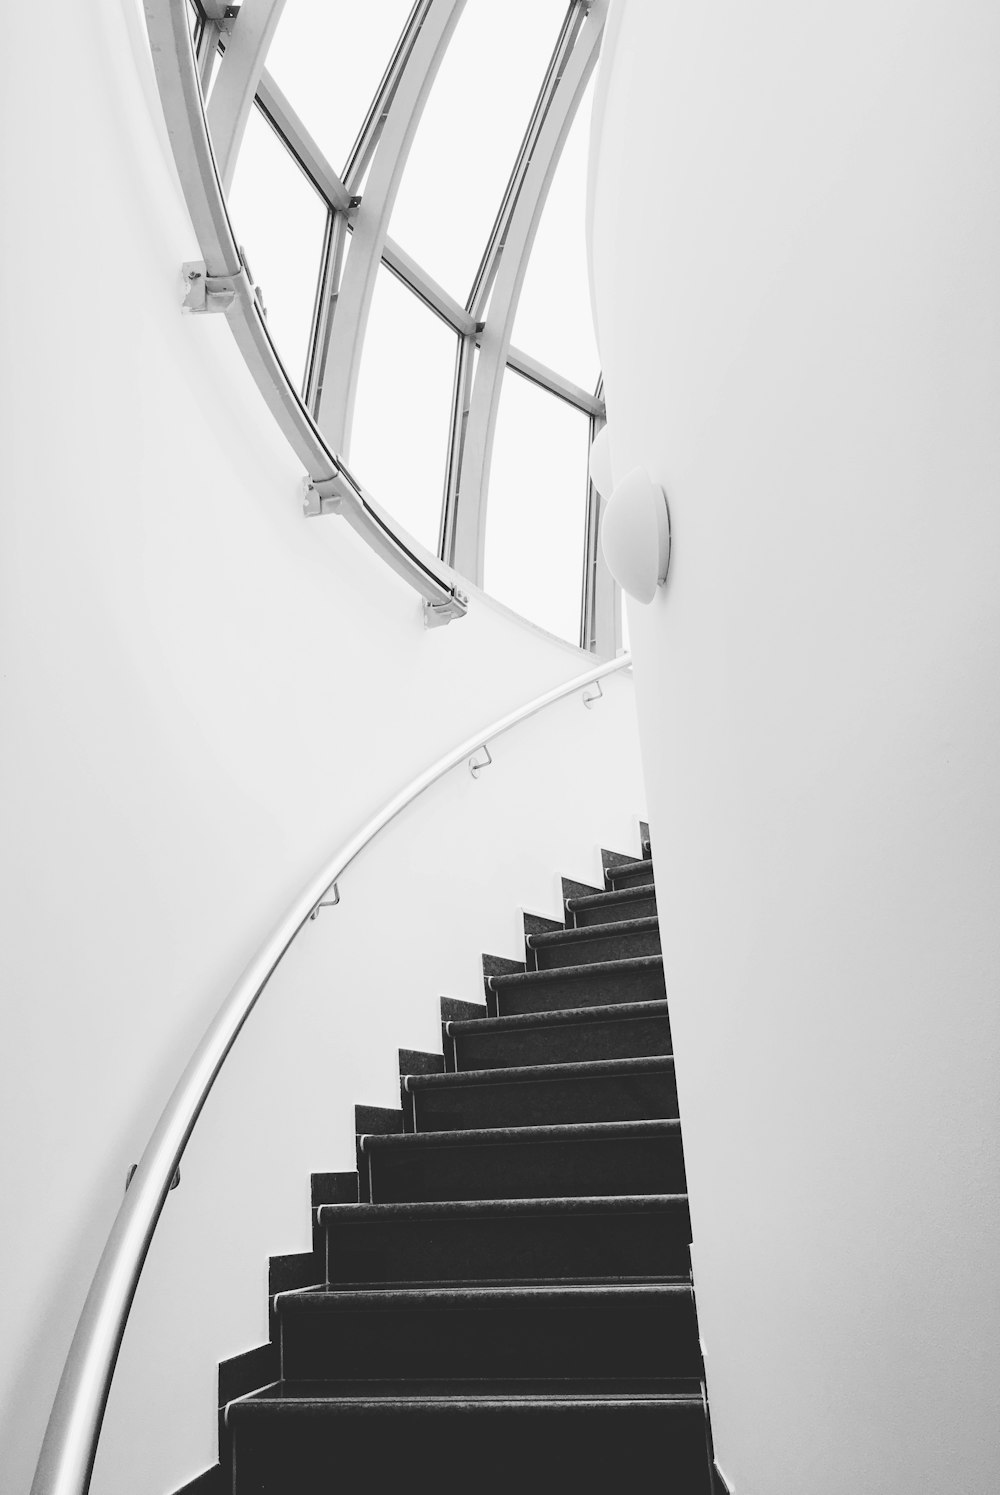 photo of stairway during daytime